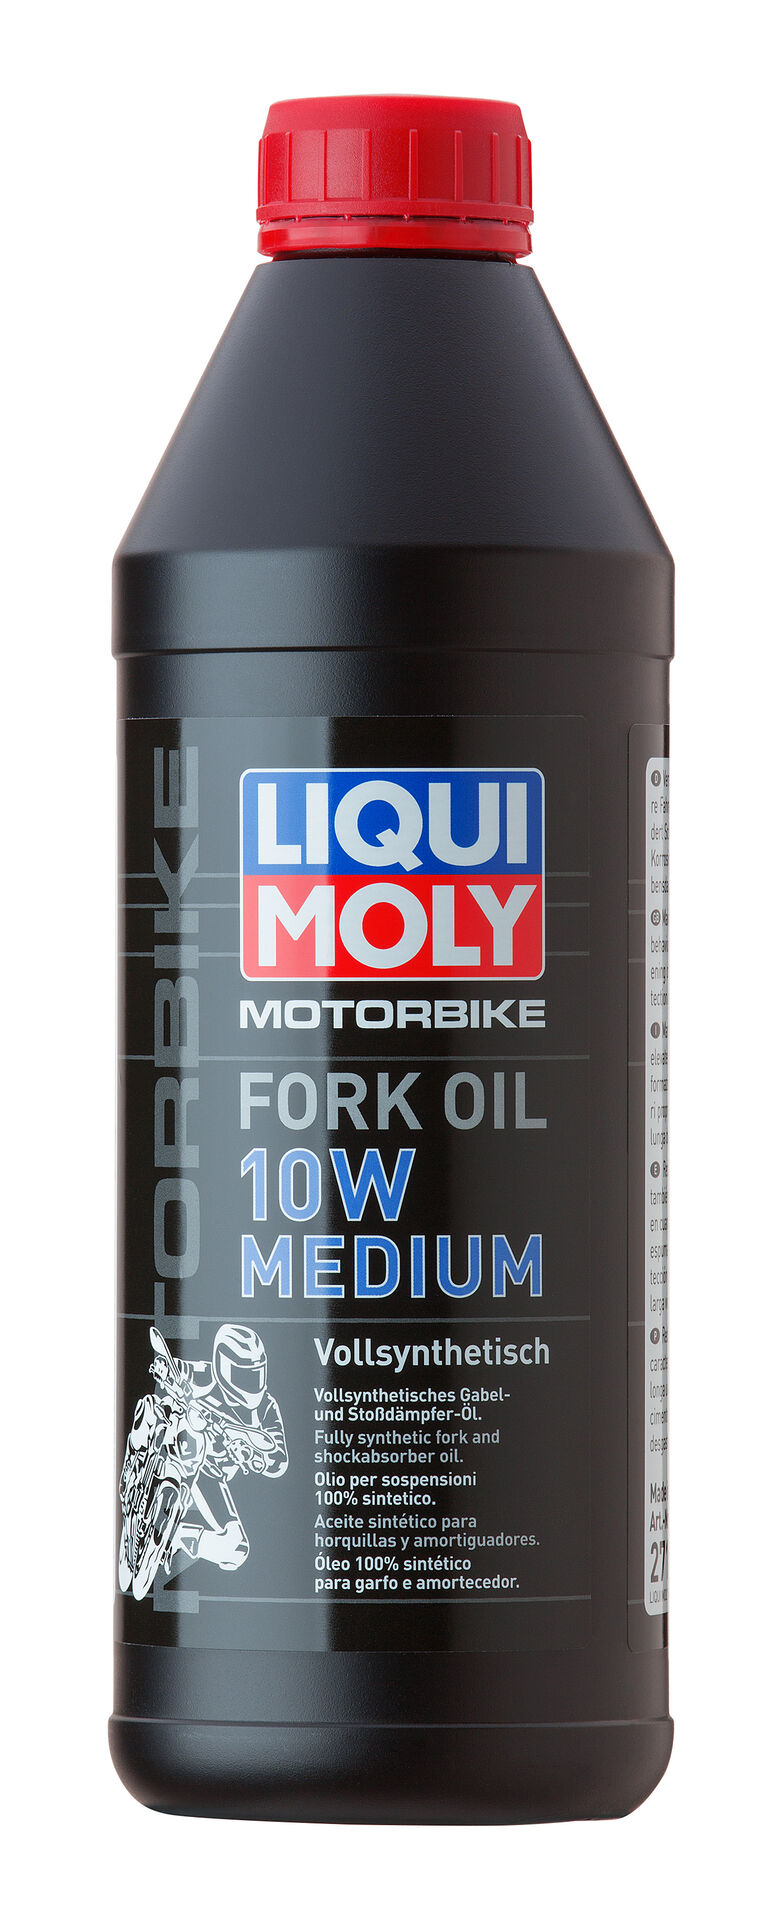 Liqui Moly Motorbike Fork Oil 10W medium Gabelöl Stoßdämpferöl 1L